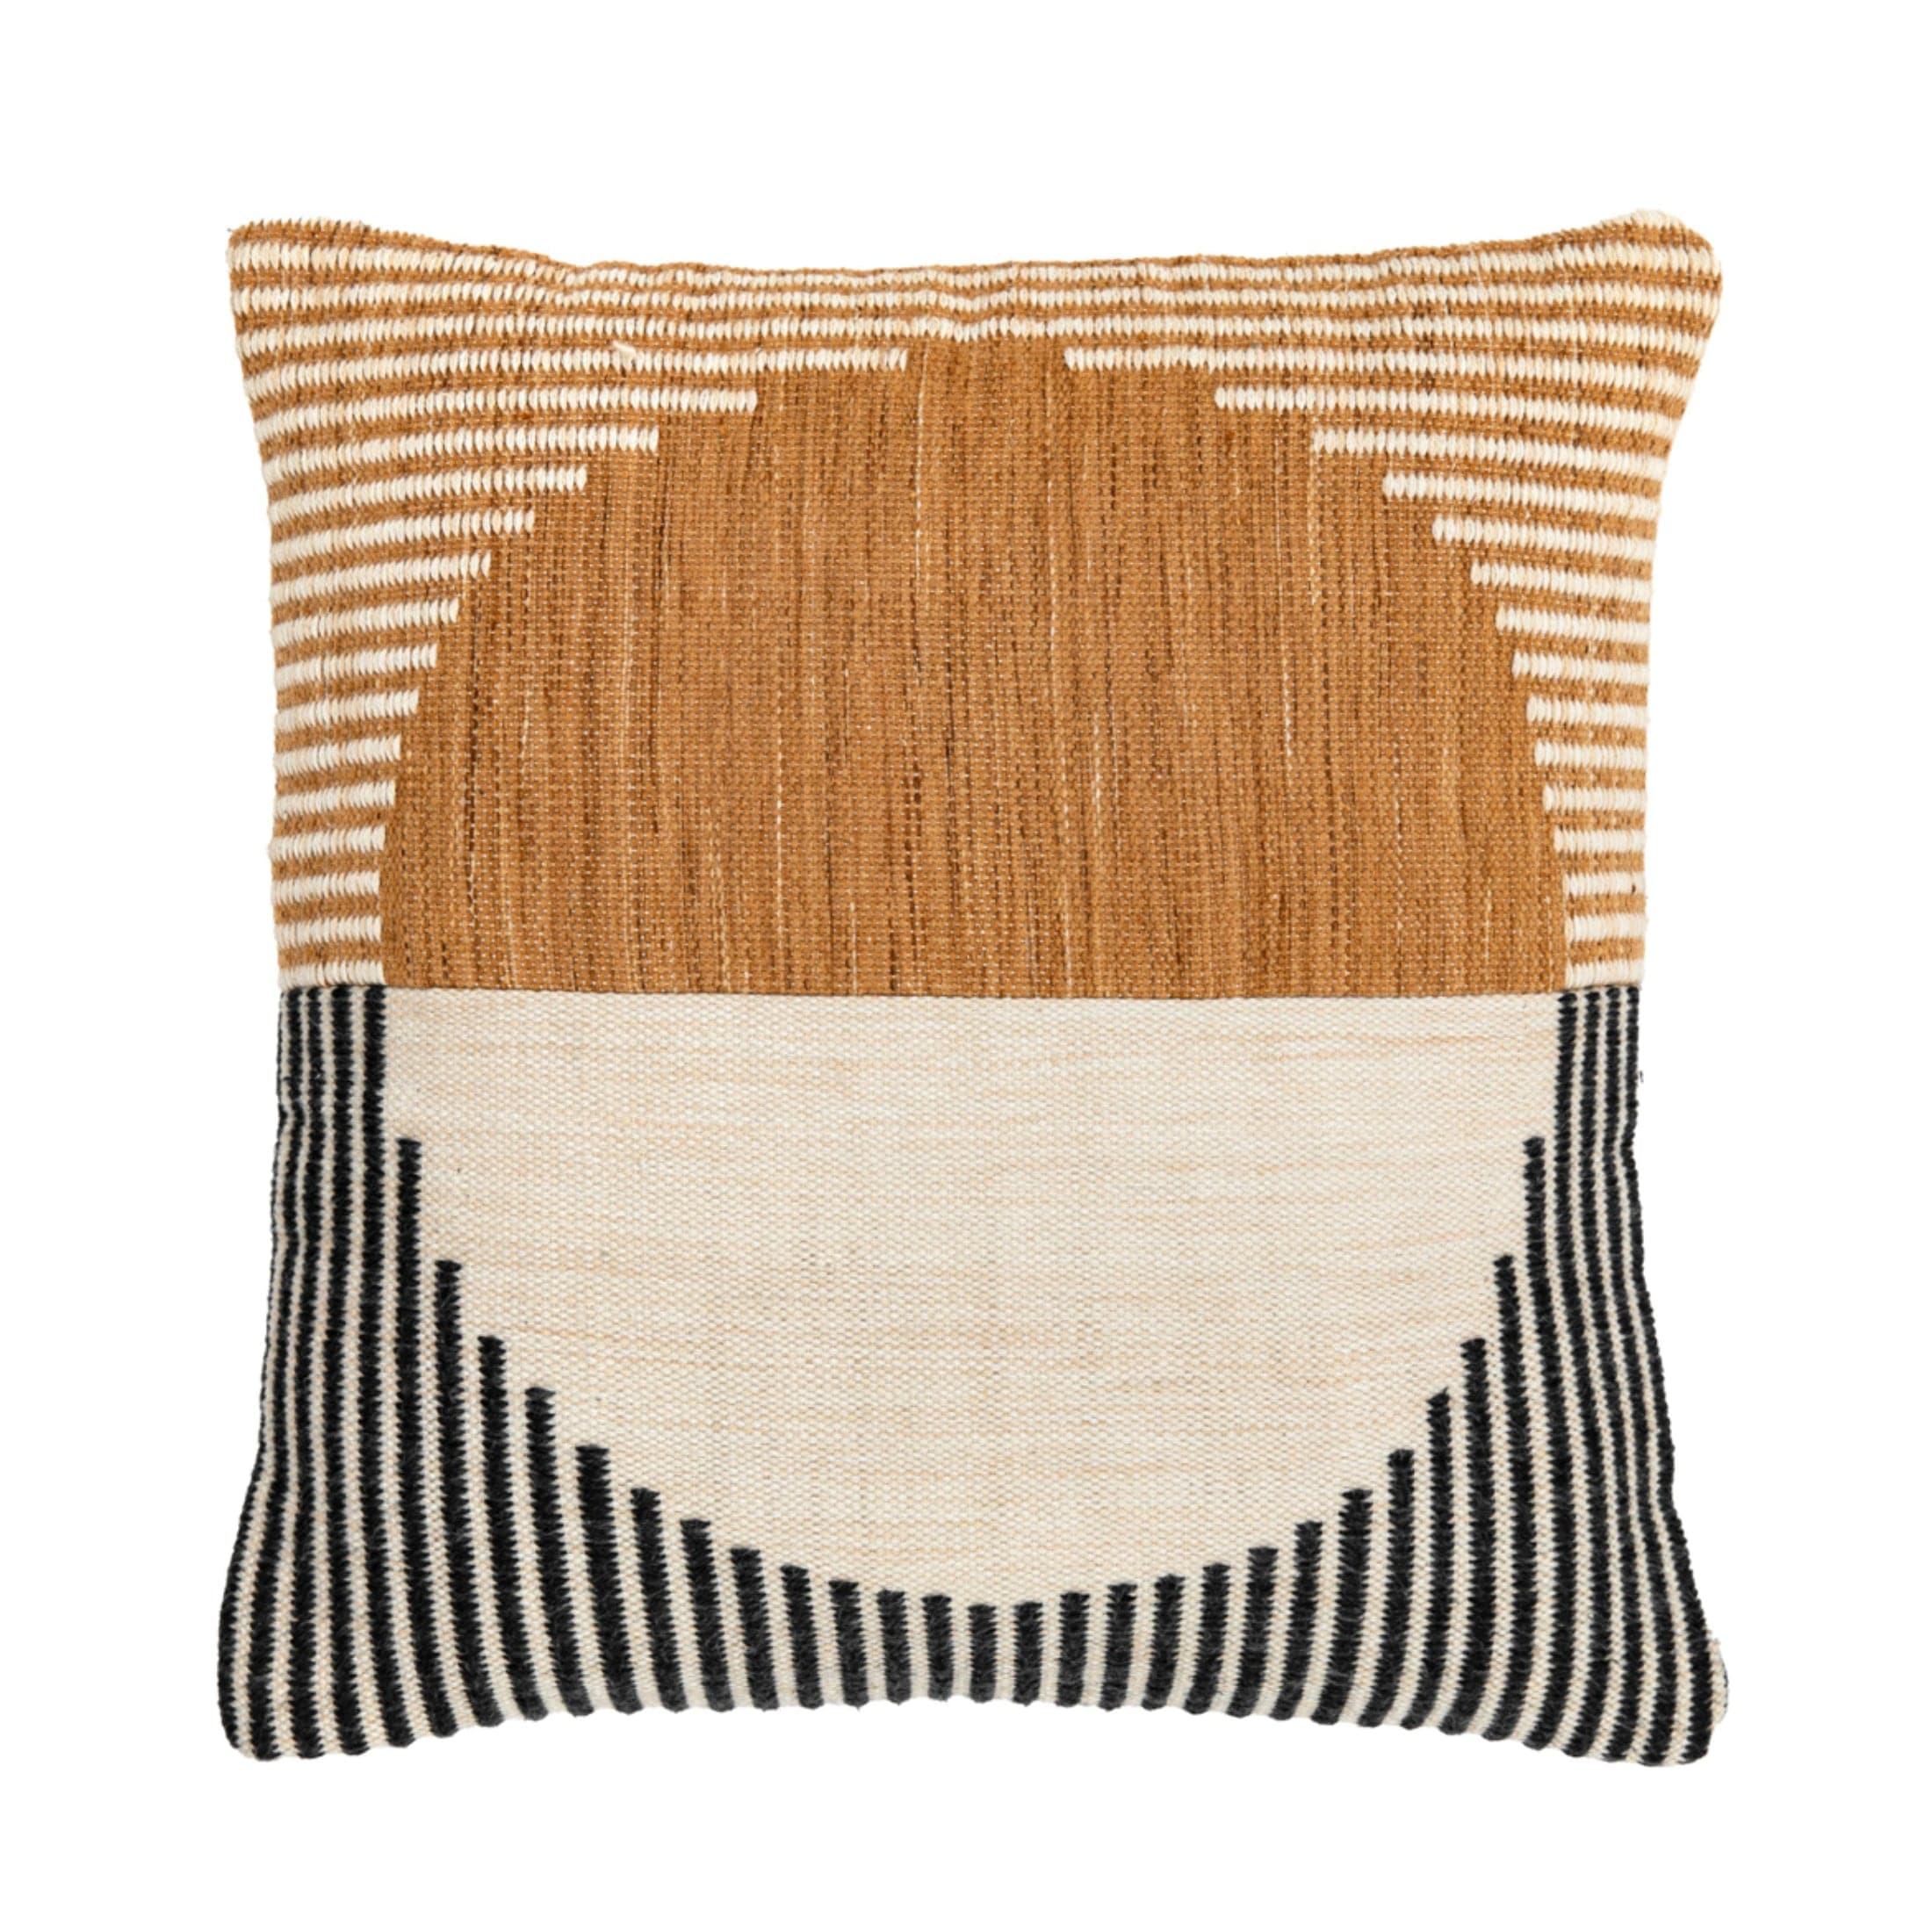 Woven Geometric Design Cushion Cover